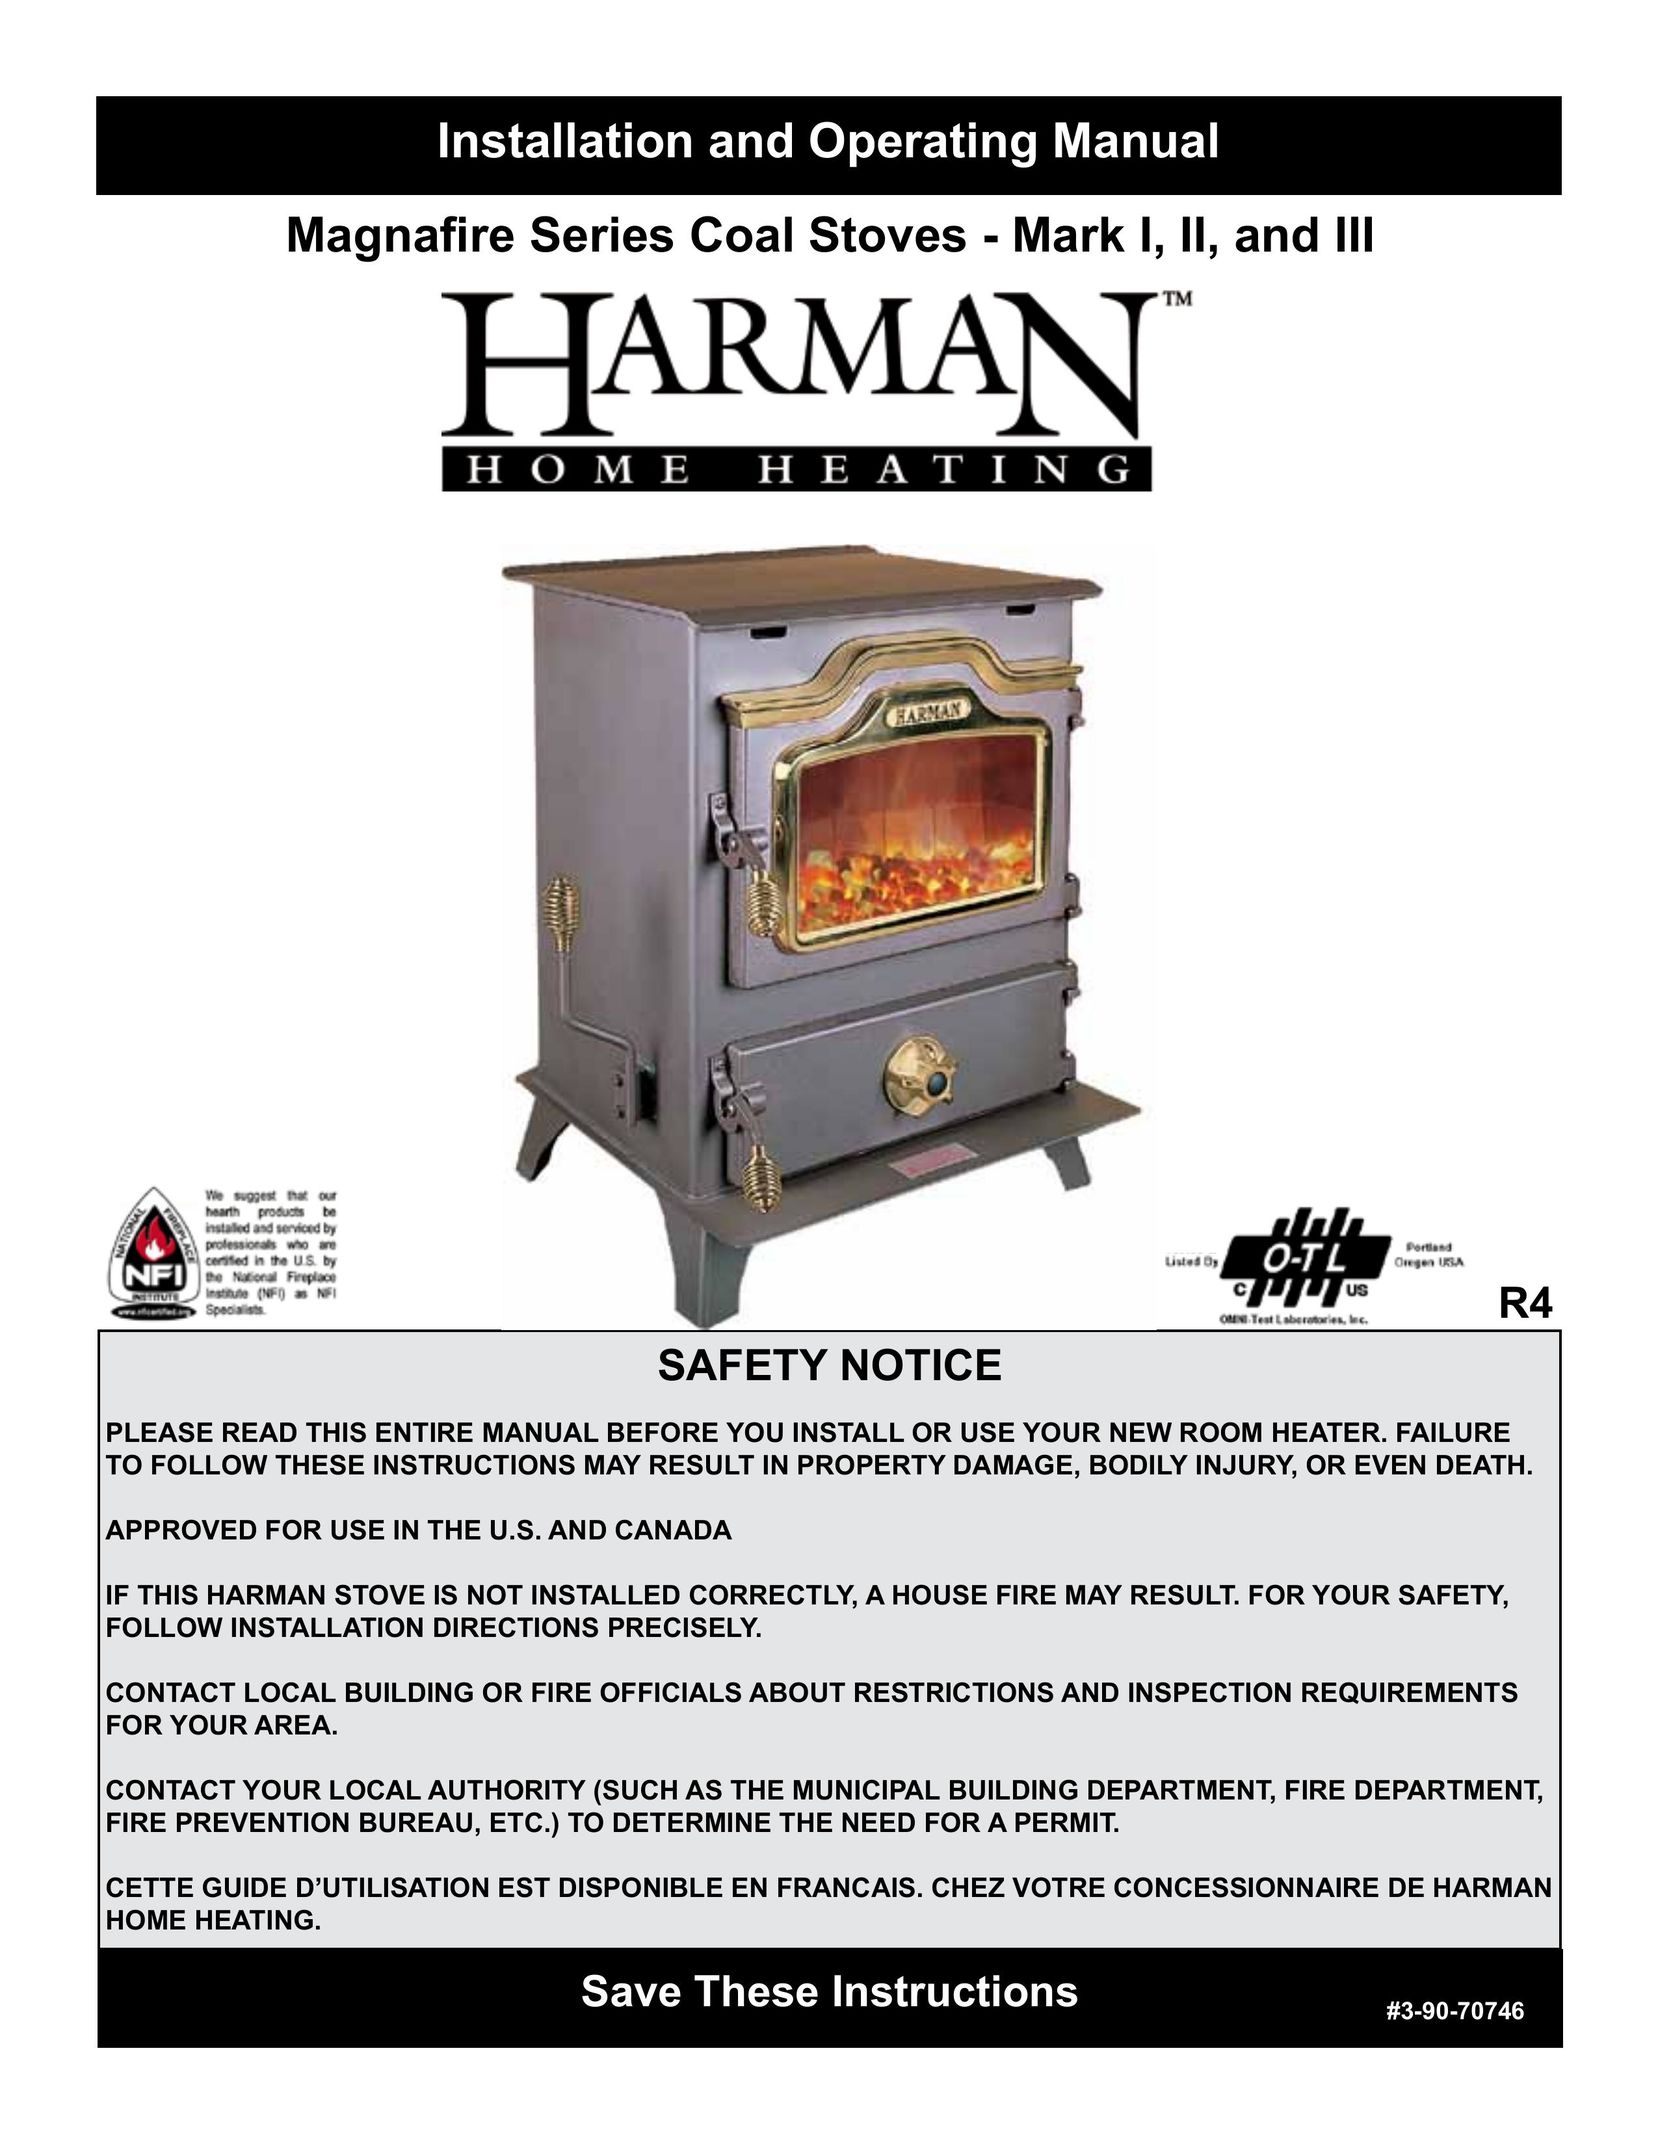 Harman Stove Company MARK I Stove User Manual